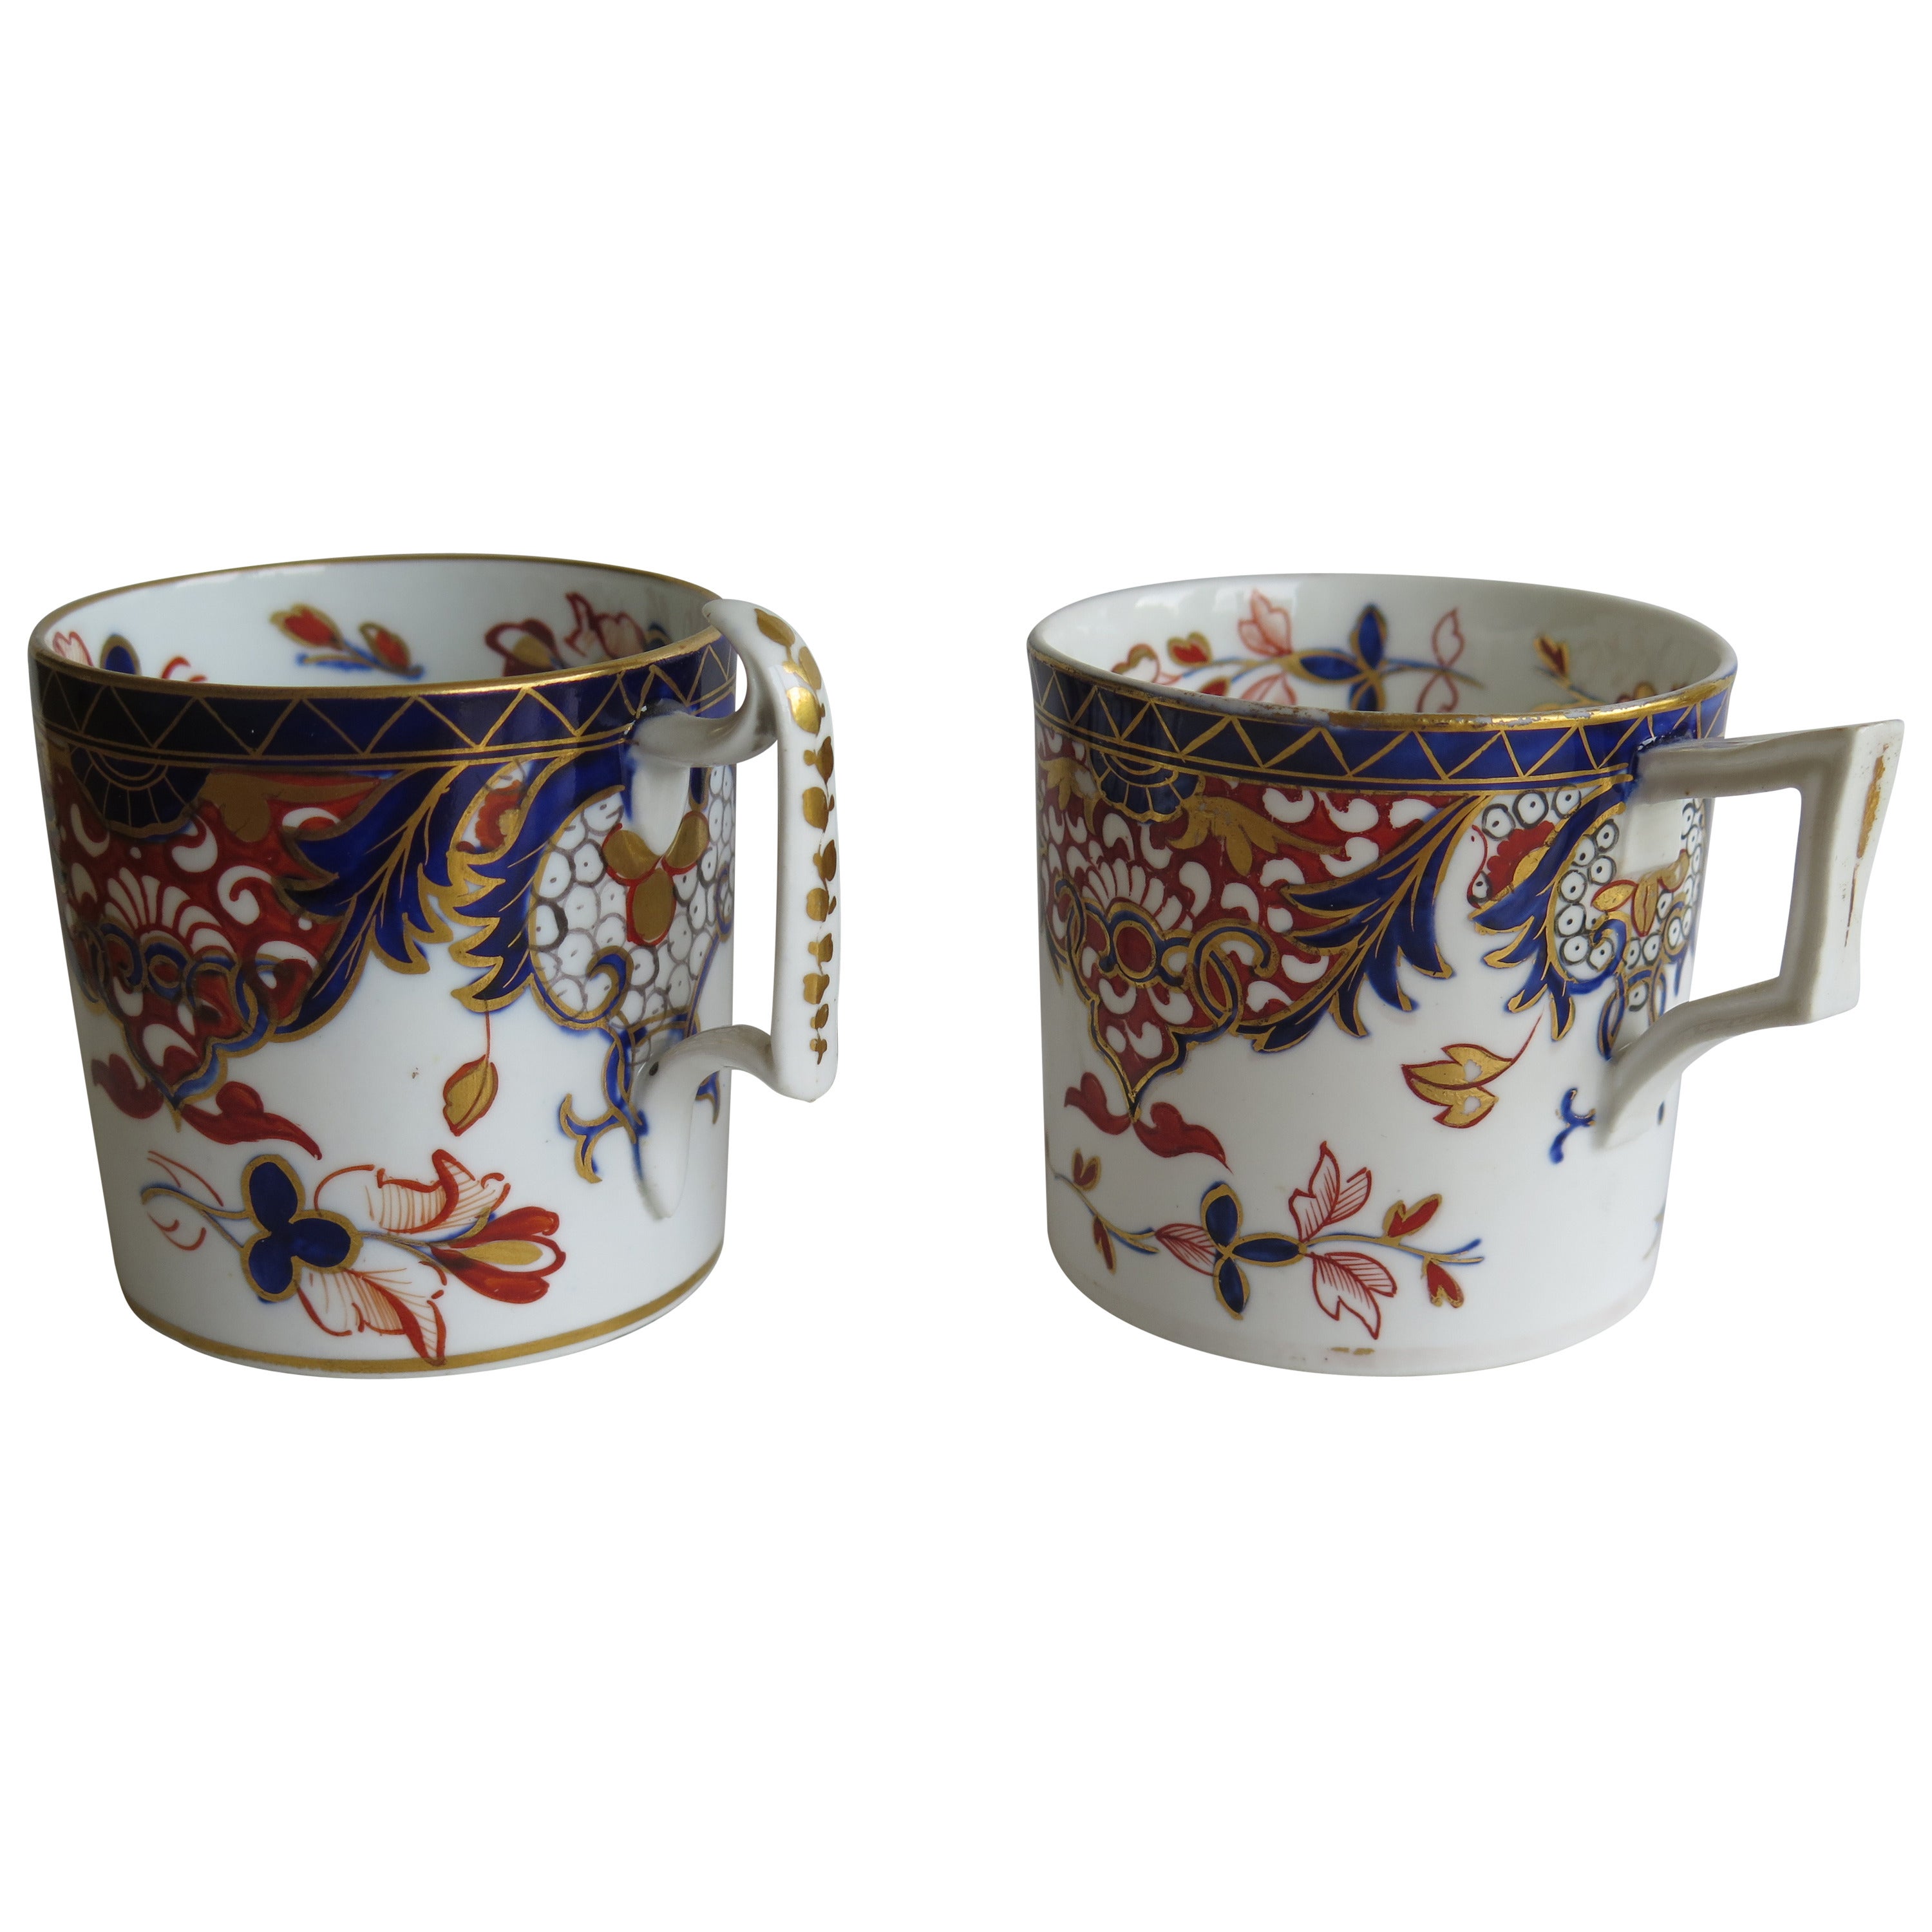 Similar PAIR George 111 Derby Porcelain Coffee Cans Old Japan Pattern, Ca 1810